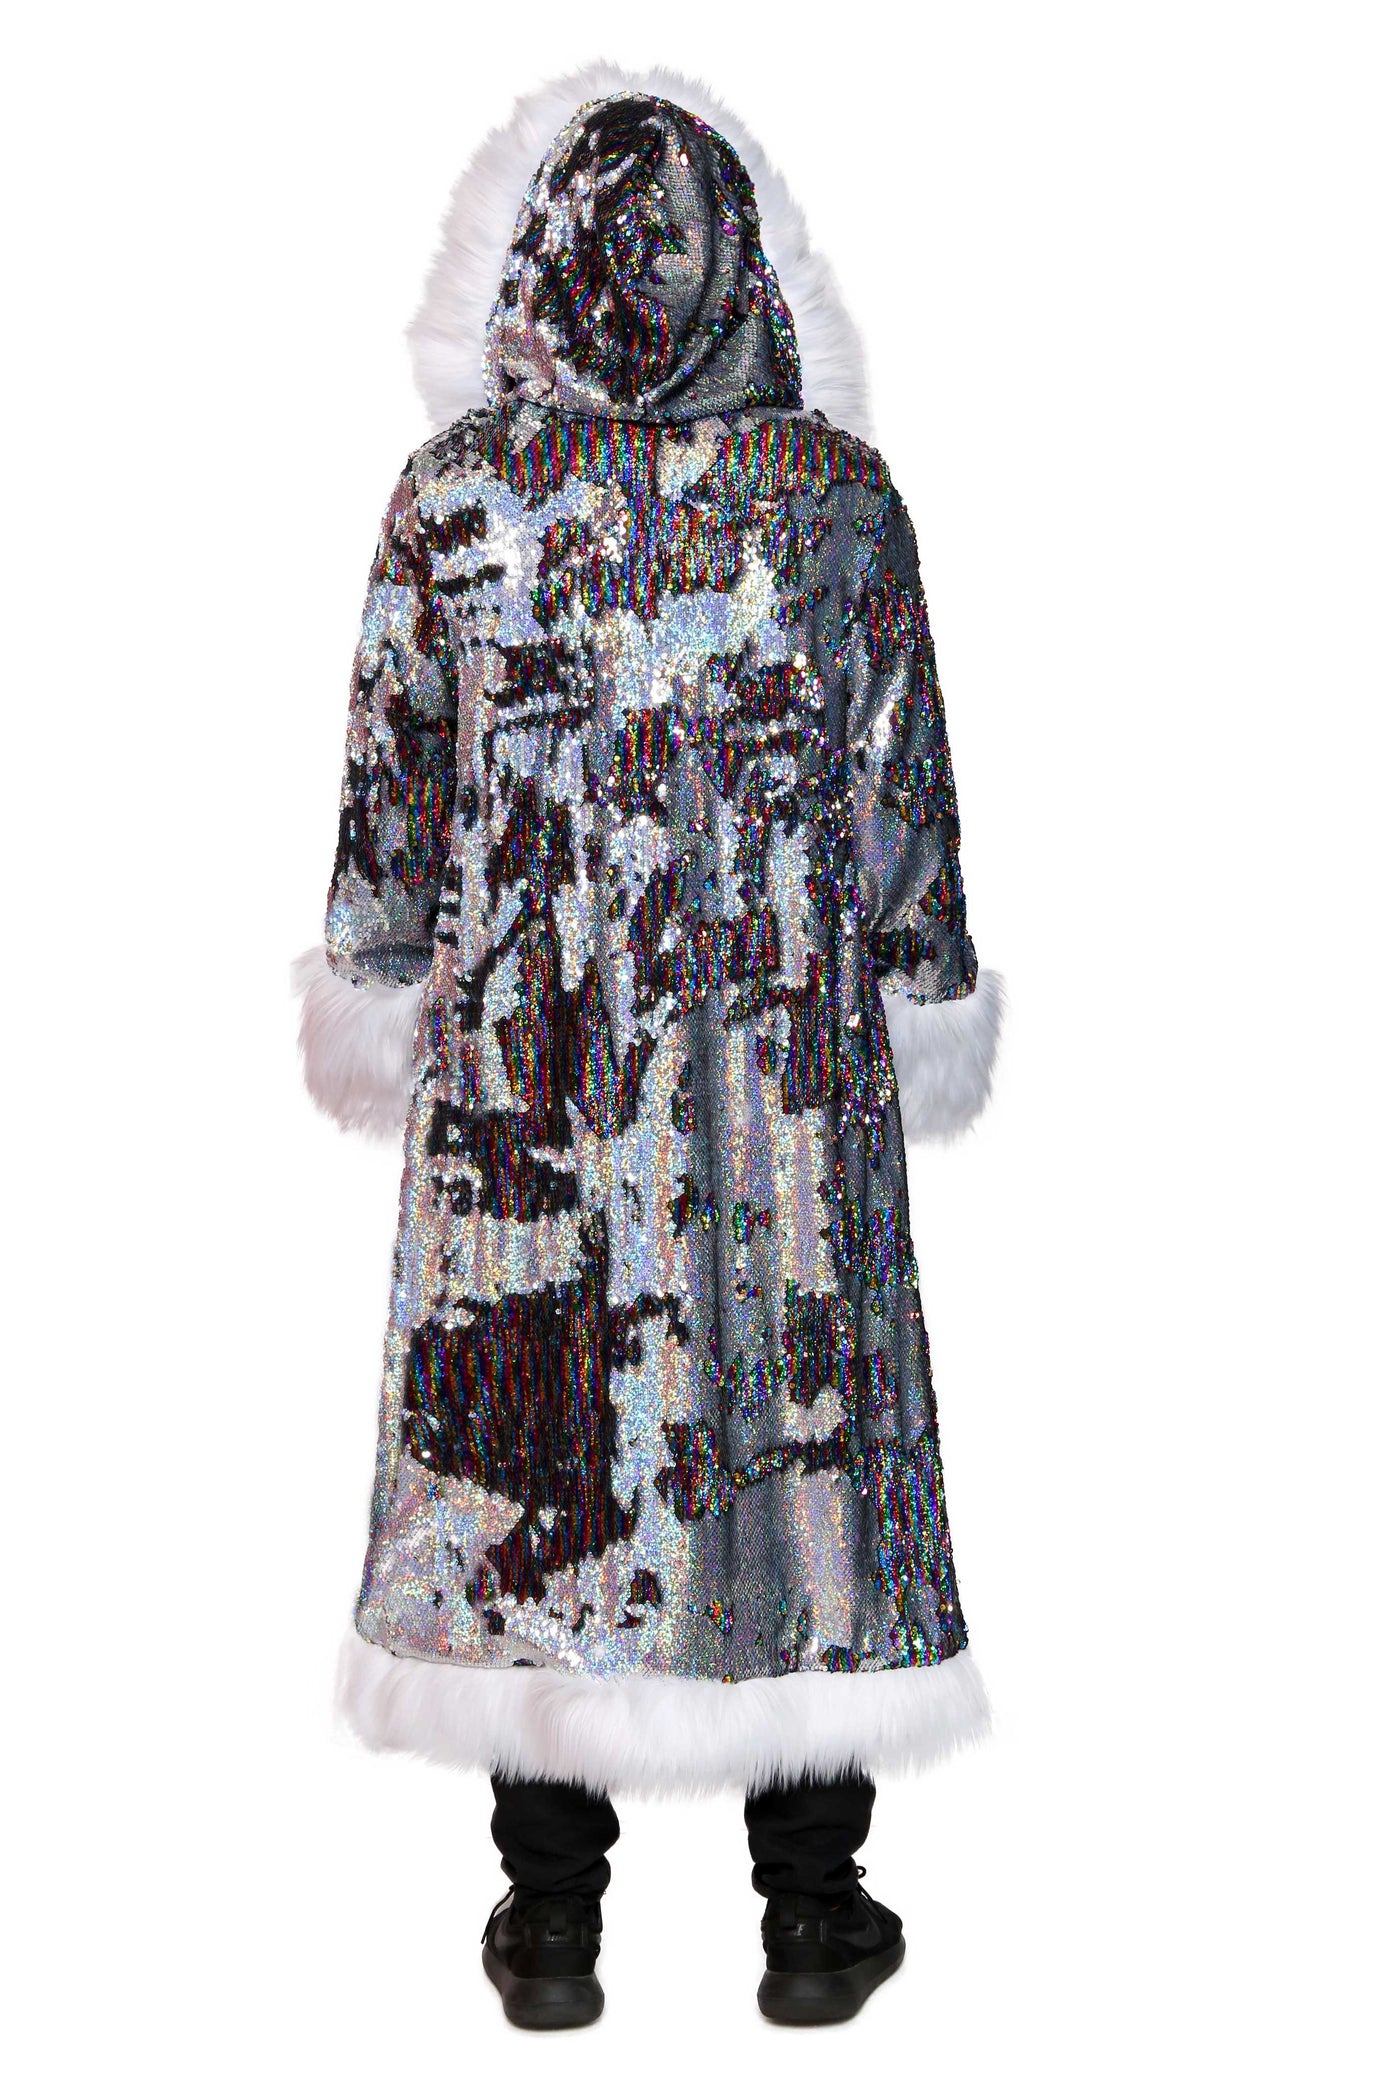 Men's Sequin King Coat in "Silver Hologram-Rainbow Stripe"